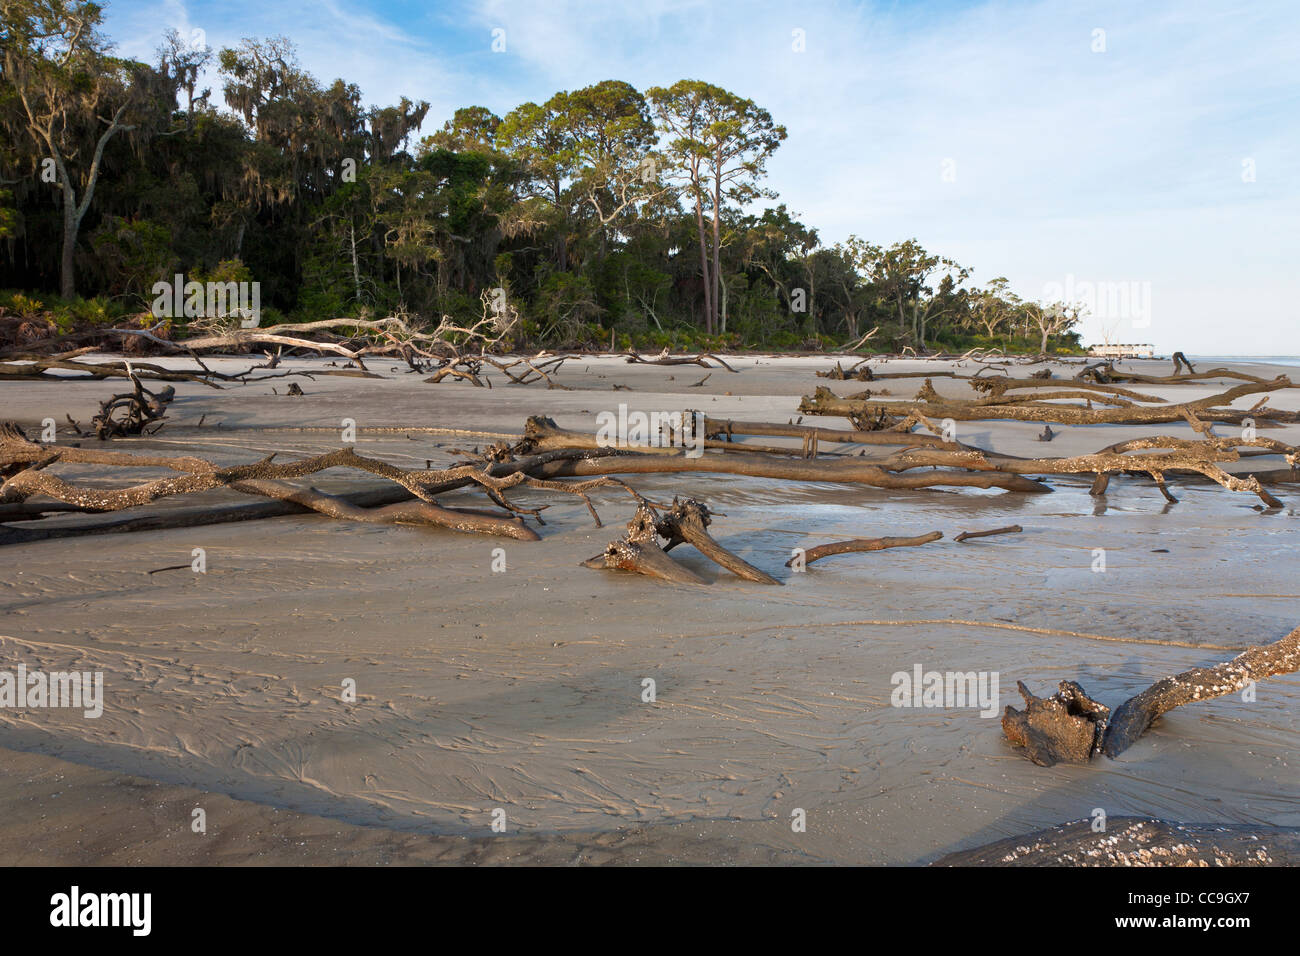 Caduta di alberi sradicati a Driftwood Beach su Jekyll Island, Georgia Foto Stock